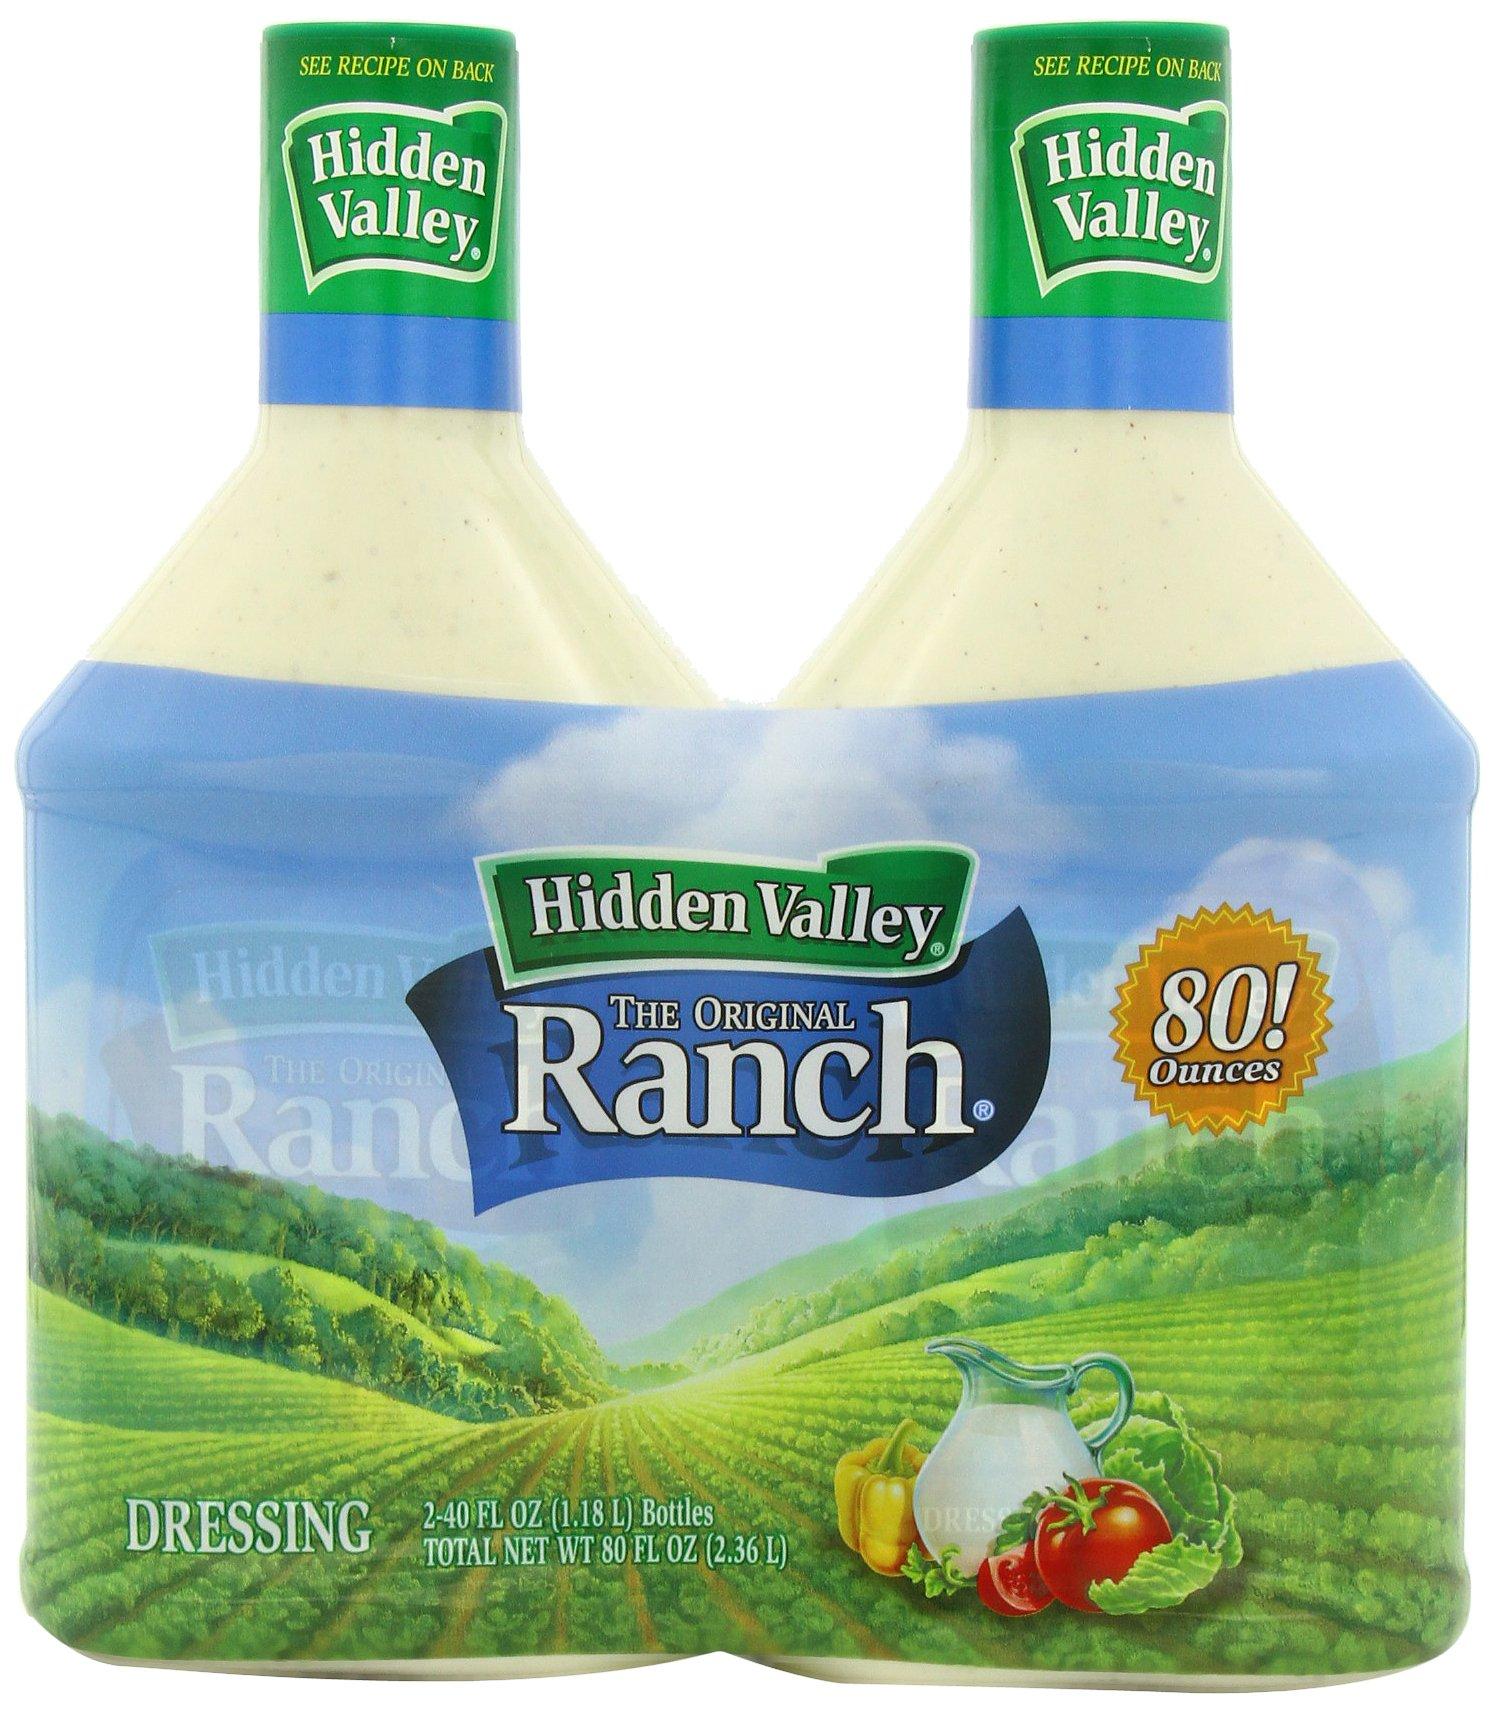 Hidden Valley The Original Ranch Dressing, Original, 2-Count Bottle, 80 fl oz Total